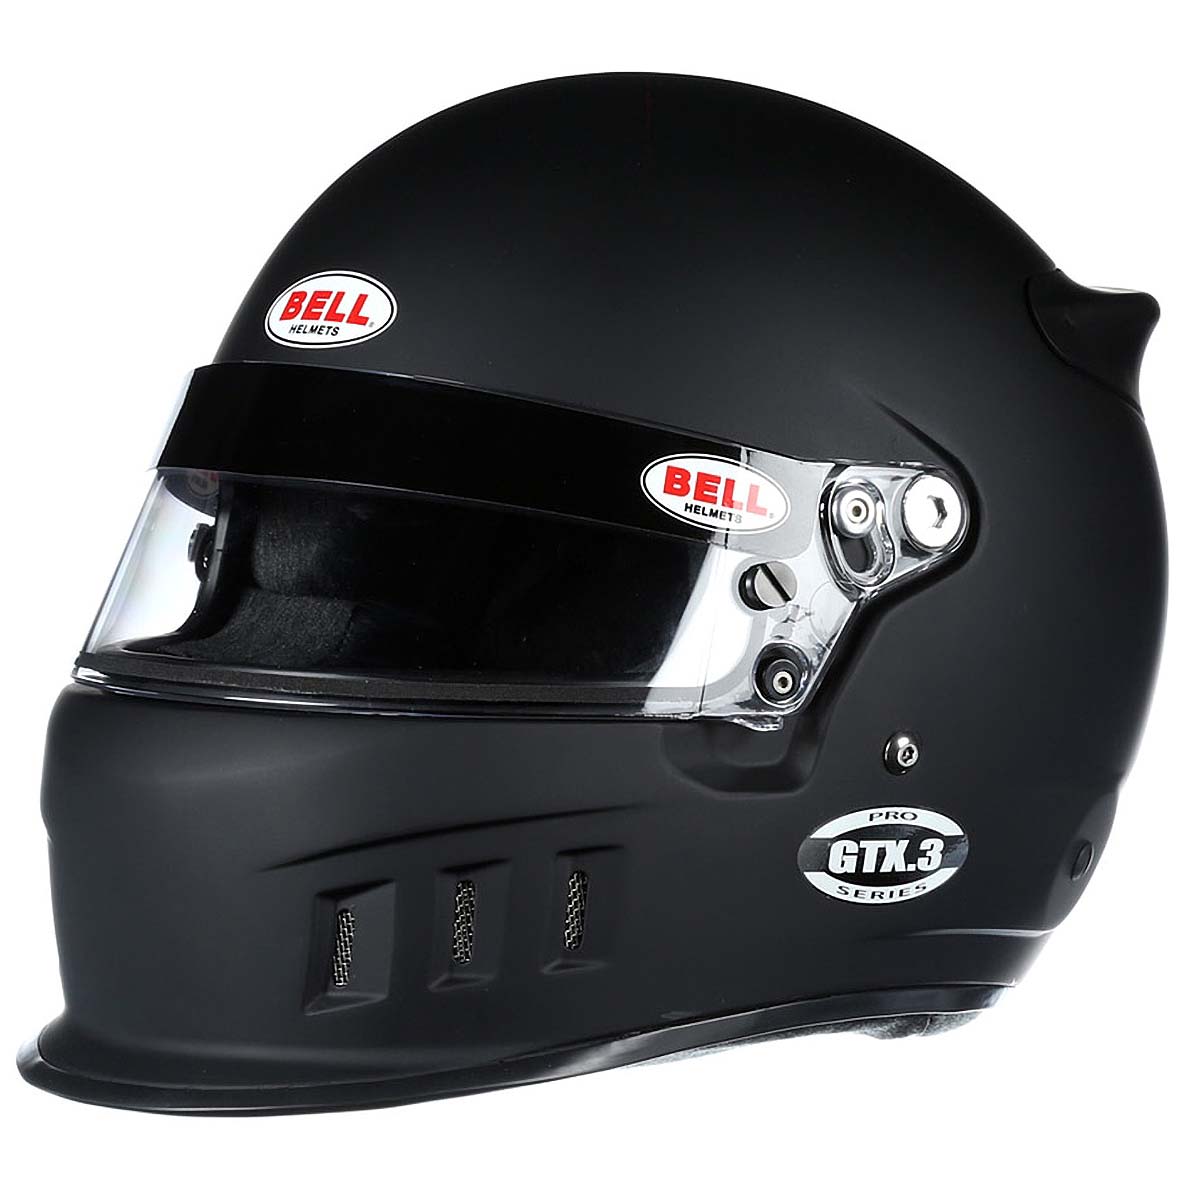 Bell GTX.3 Helmet matte black SA2020 Front View Image